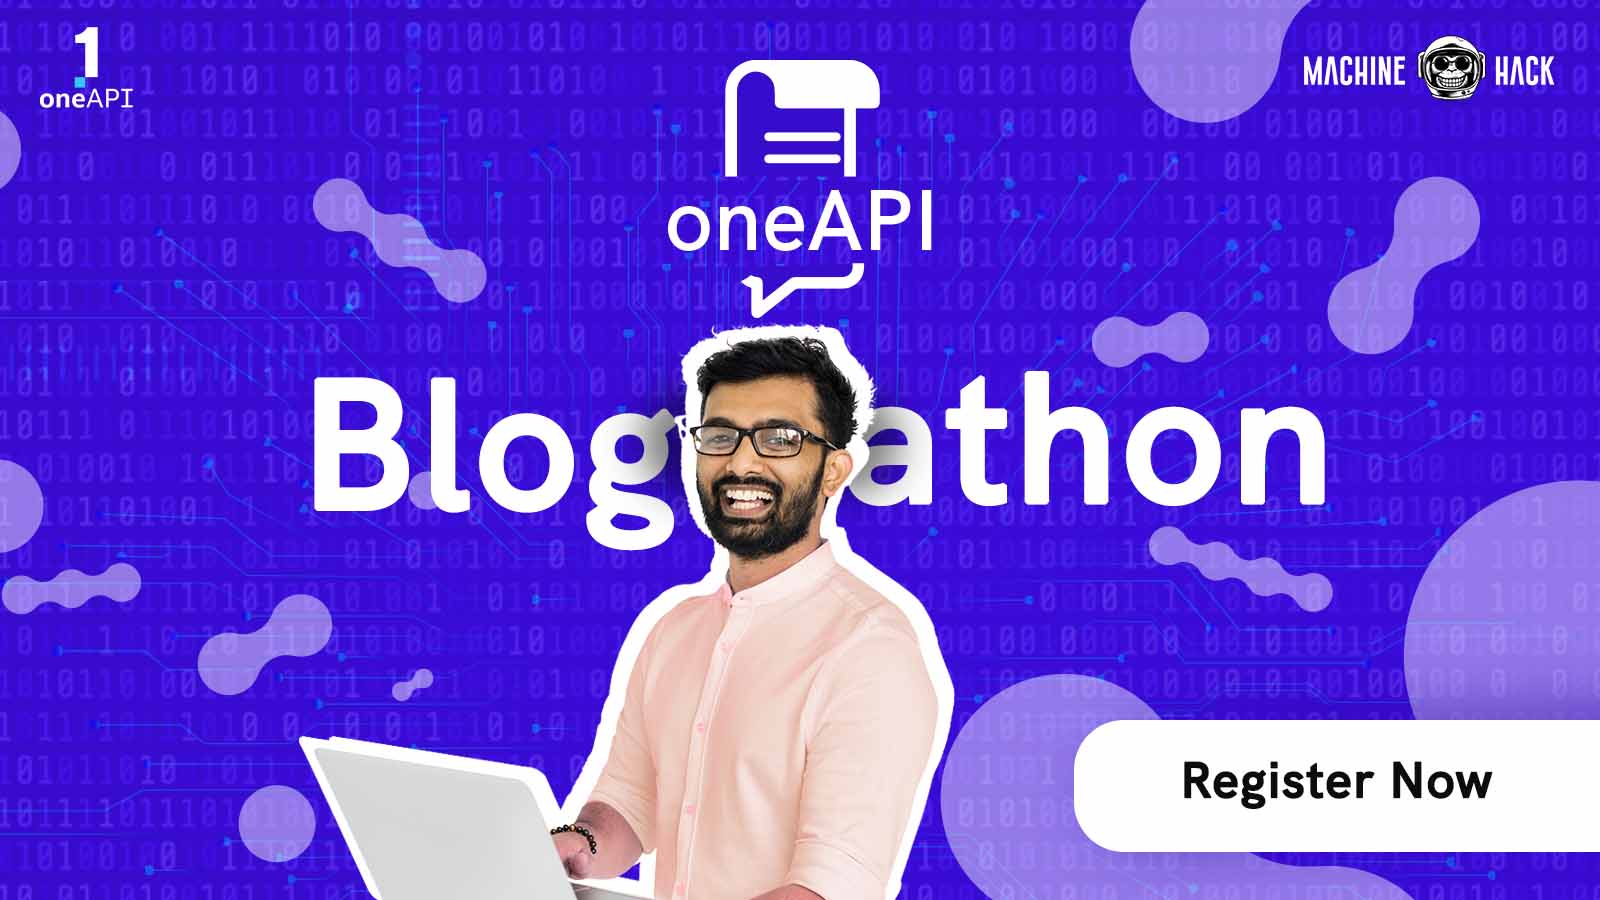 Intel® & MachineHack to launch oneAPI Blogathon Contest